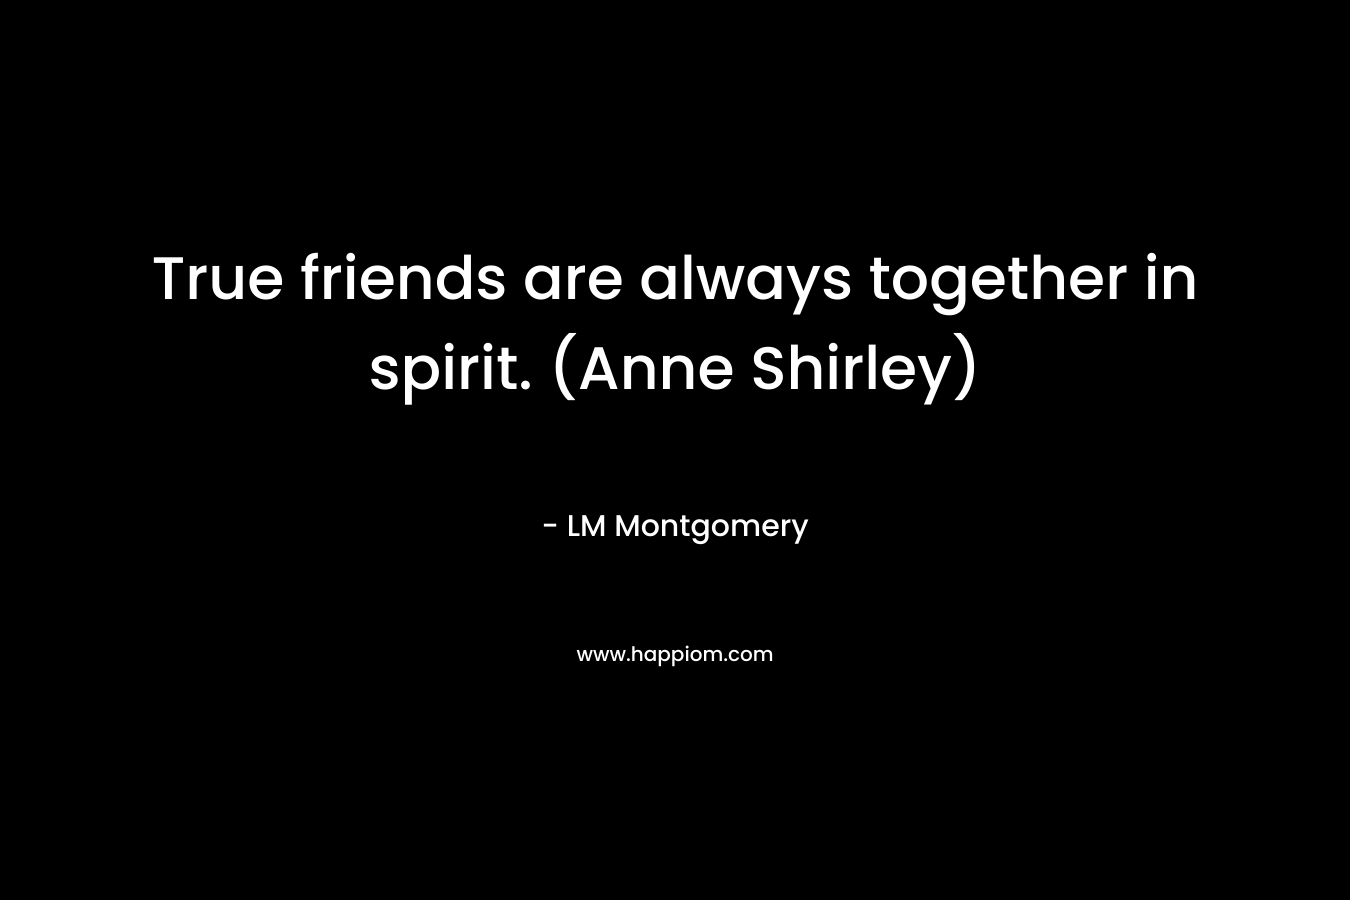 True friends are always together in spirit. (Anne Shirley)